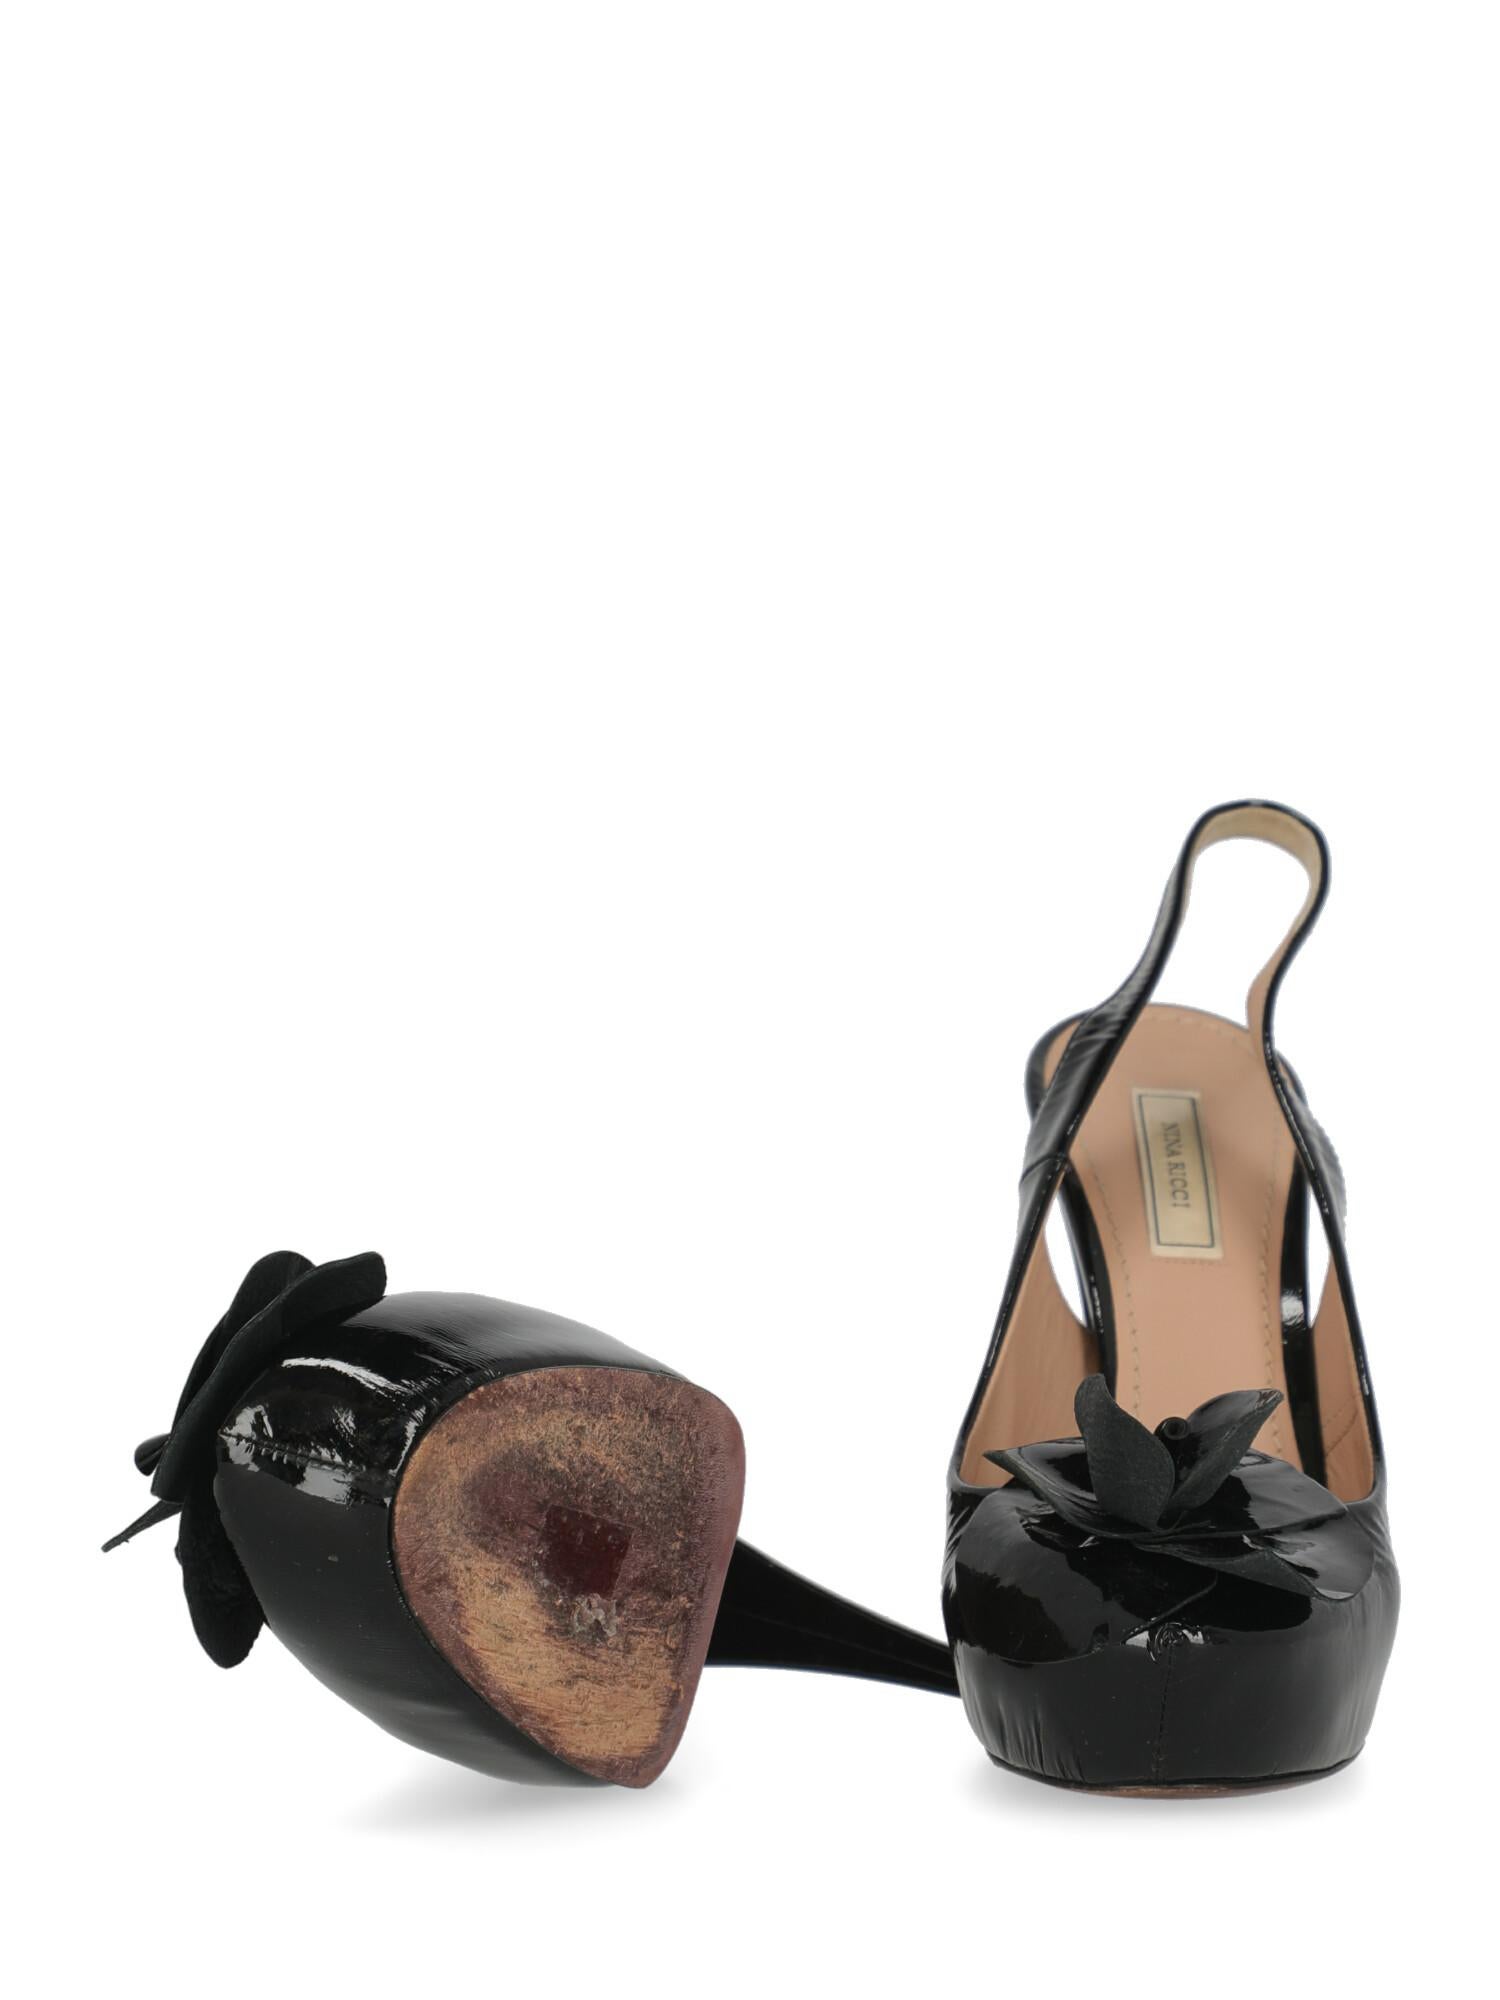 Nina Ricci Woman Pumps Black Leather IT 38.5 For Sale 1